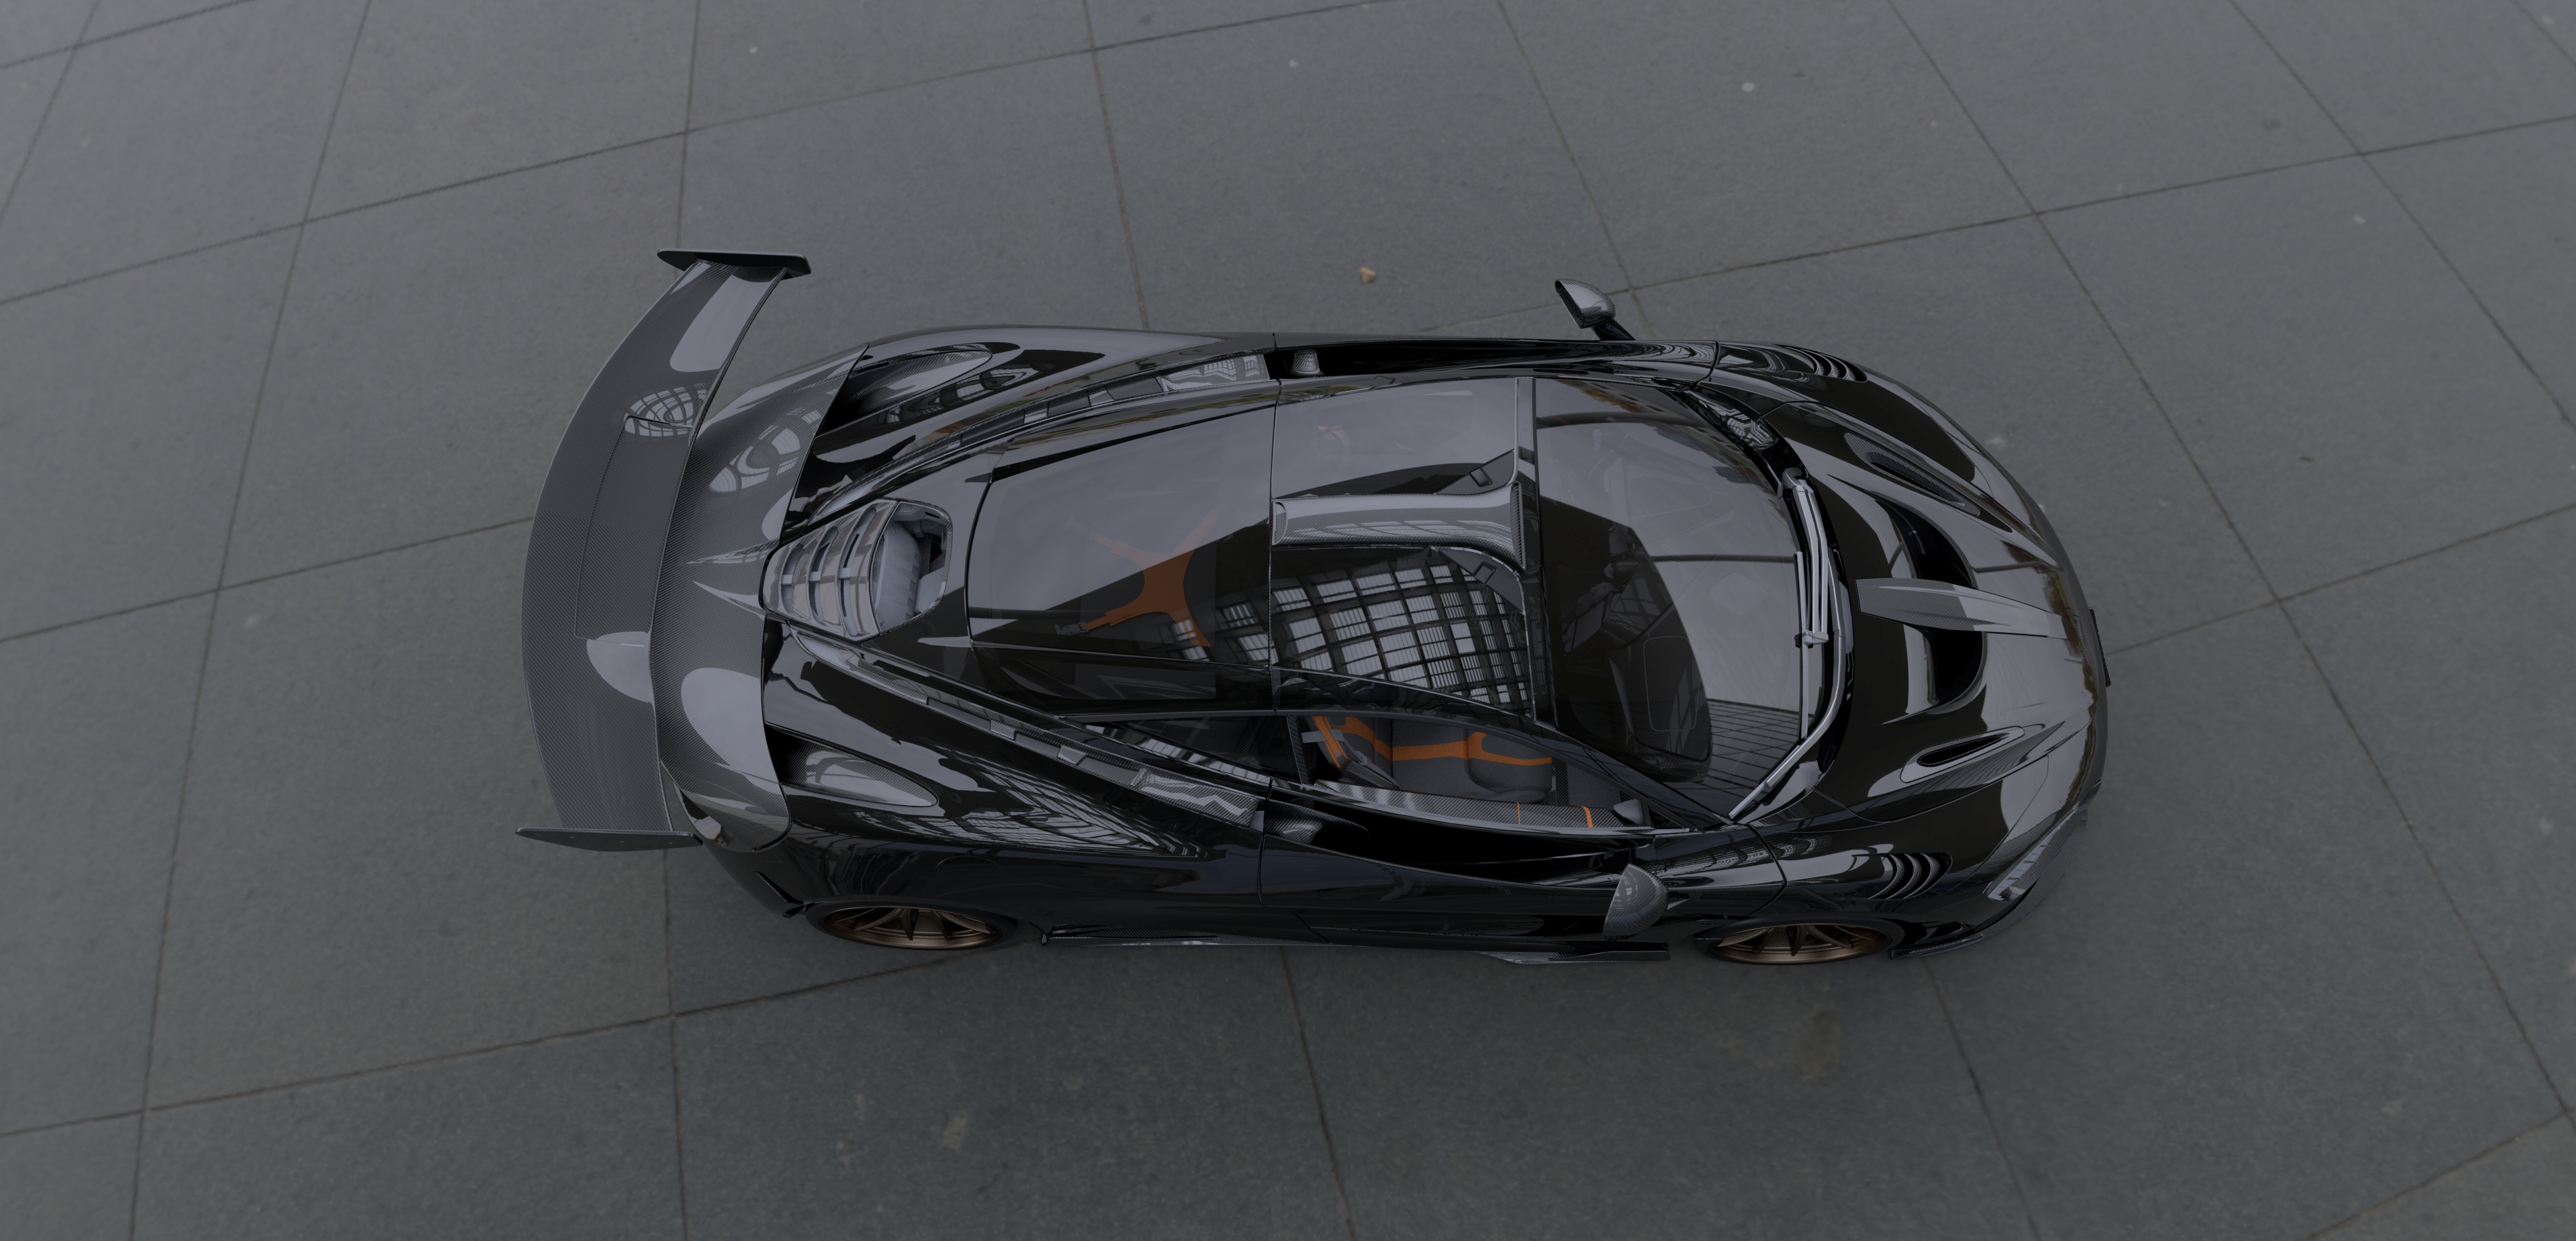 Check price and buy Duke Dynamics Body kit set for McLaren 720s